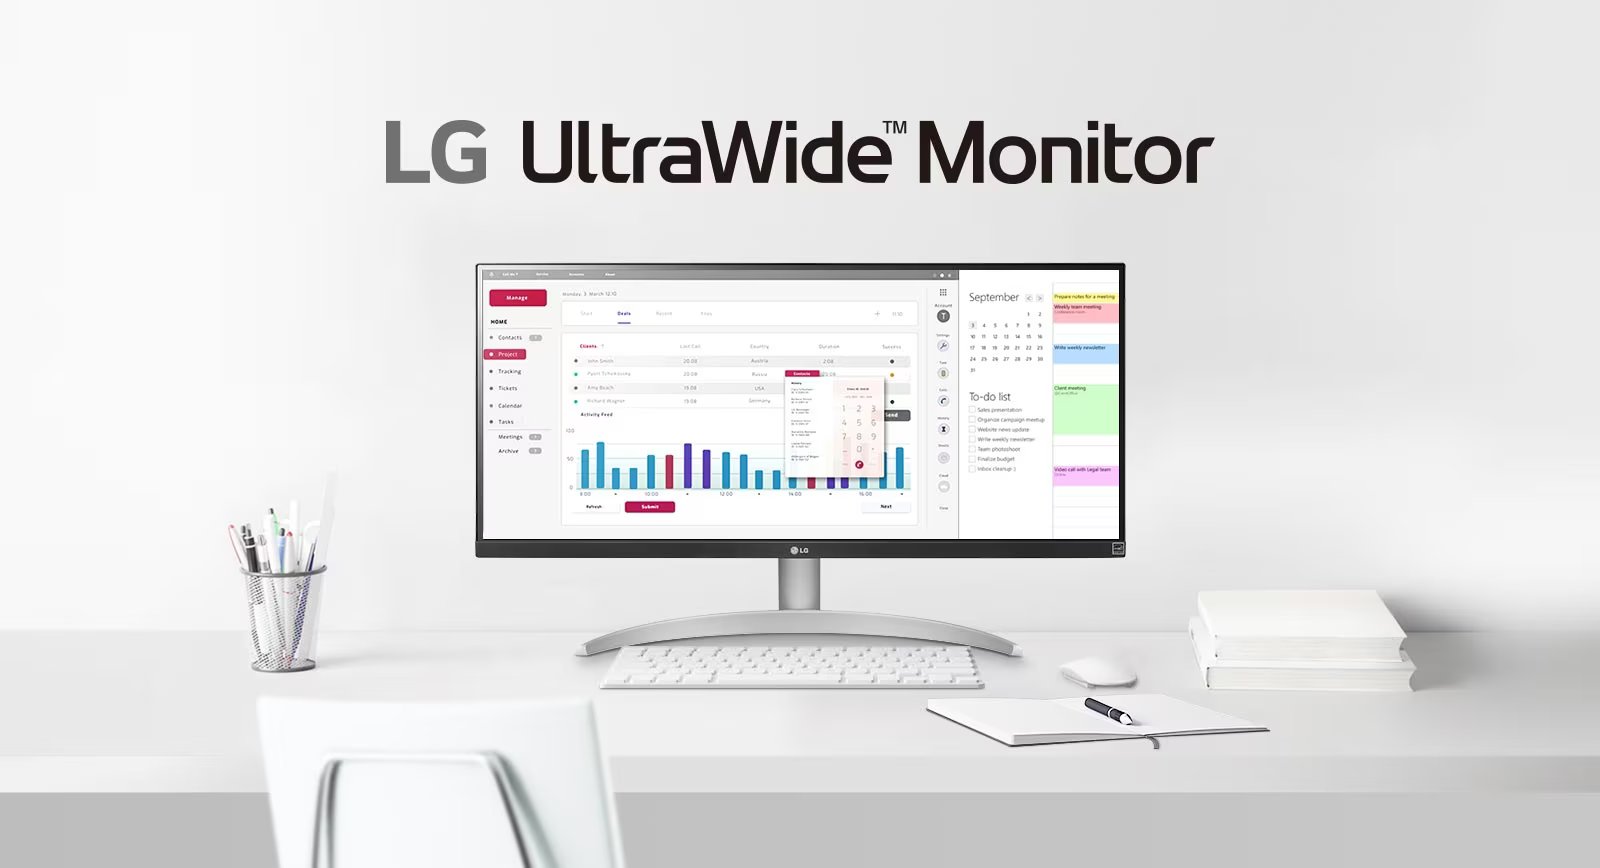 mnt-ultrawide-29wq600-01-lg-ultrawide-monitor-desktop1